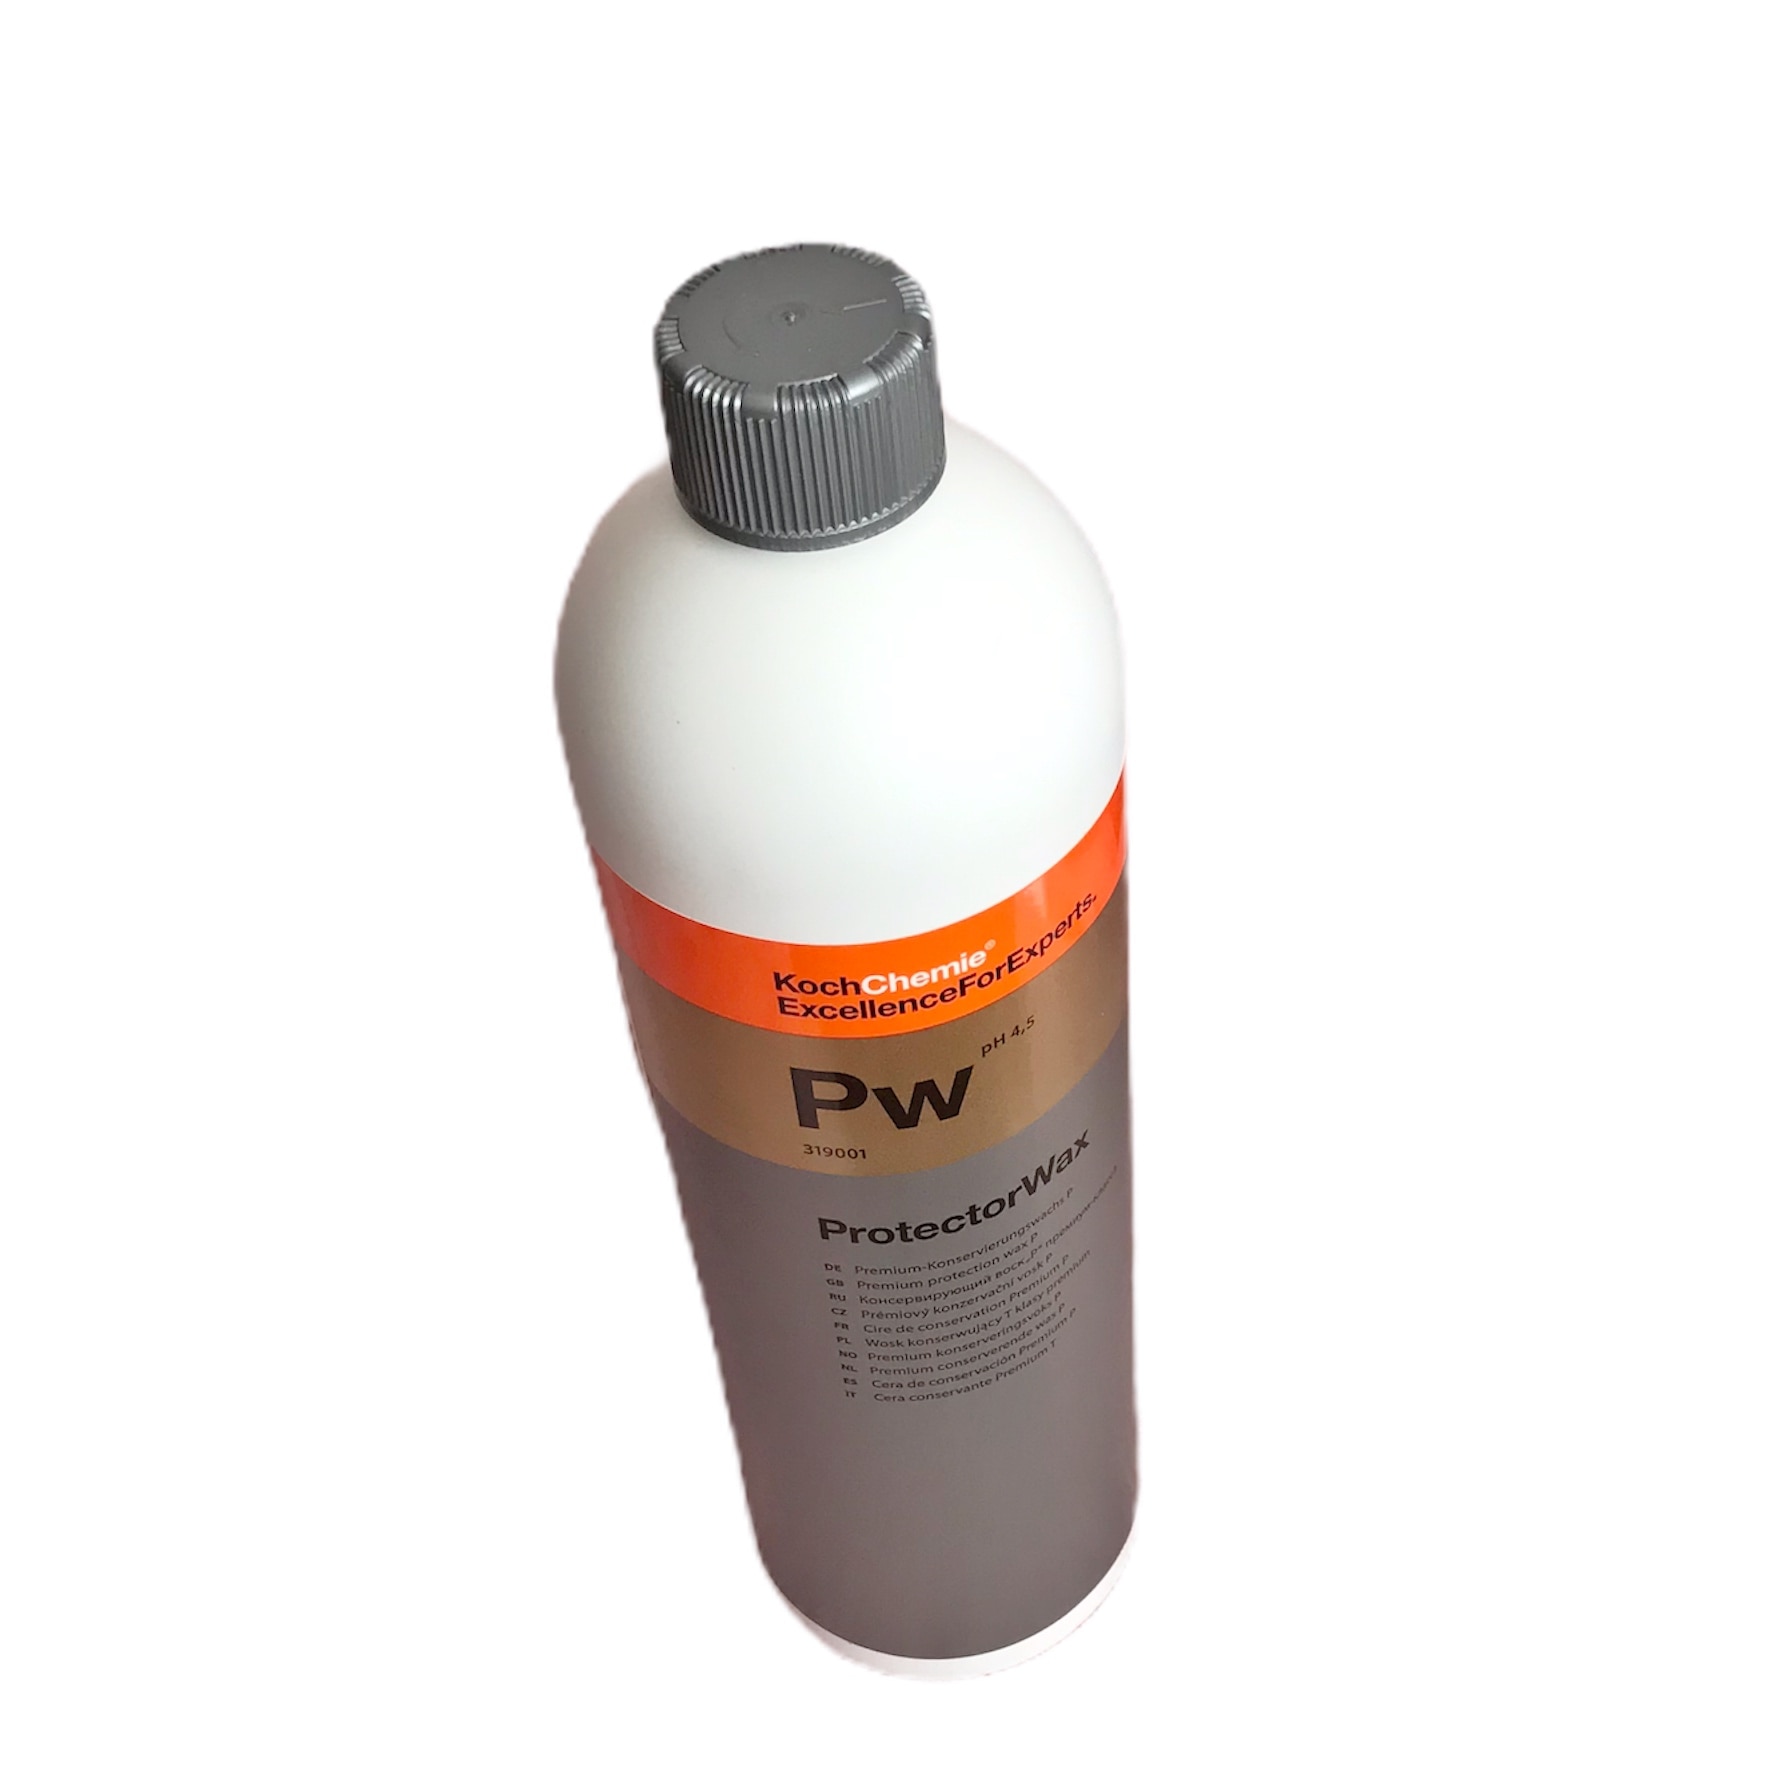 Koch Chemie Pw Protector Wax ProtectorWax 1L 